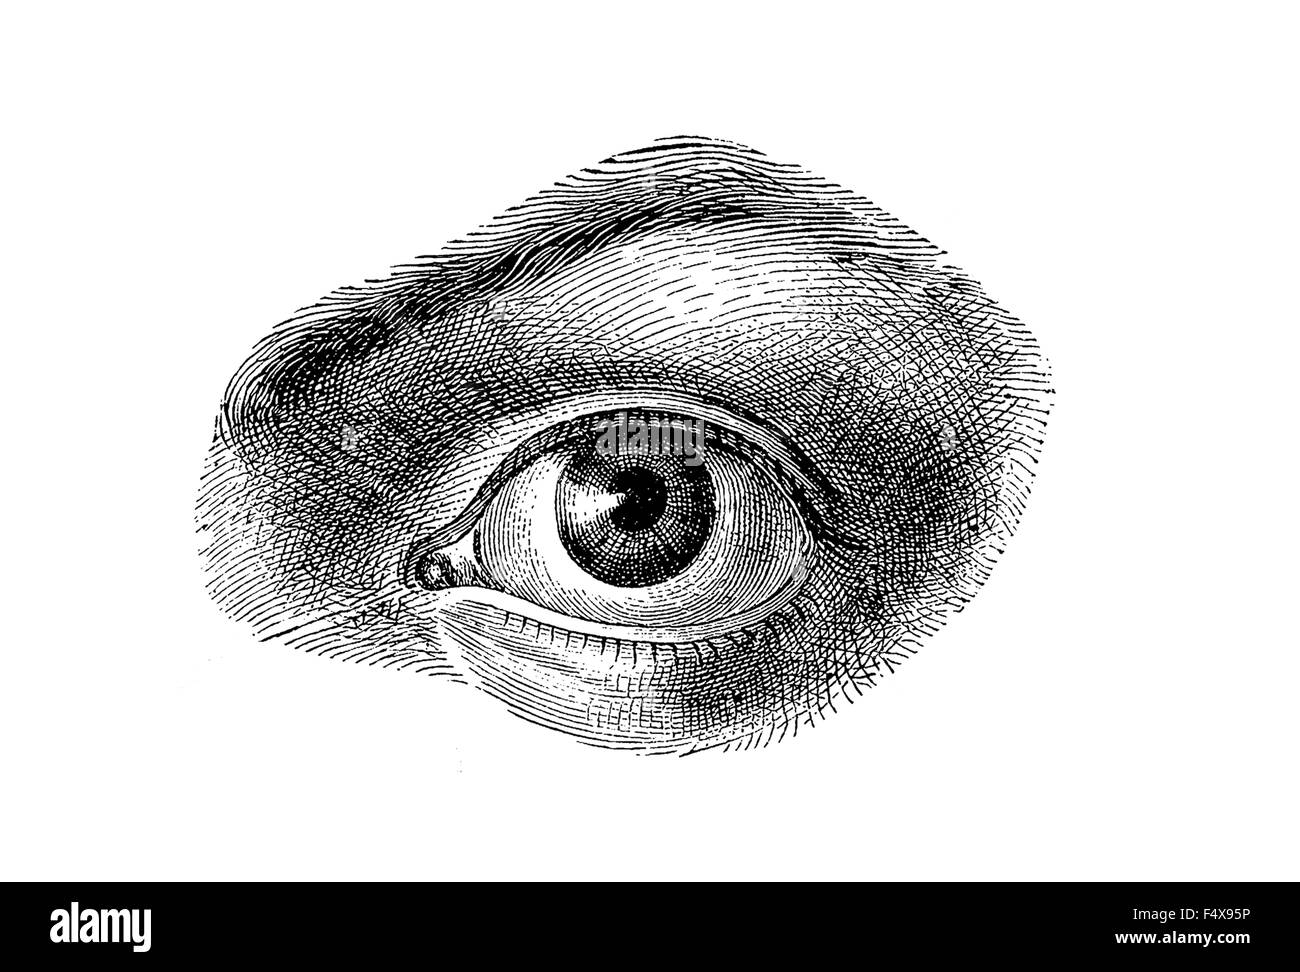 Anatomy - human eye, vintage engraving Stock Photo